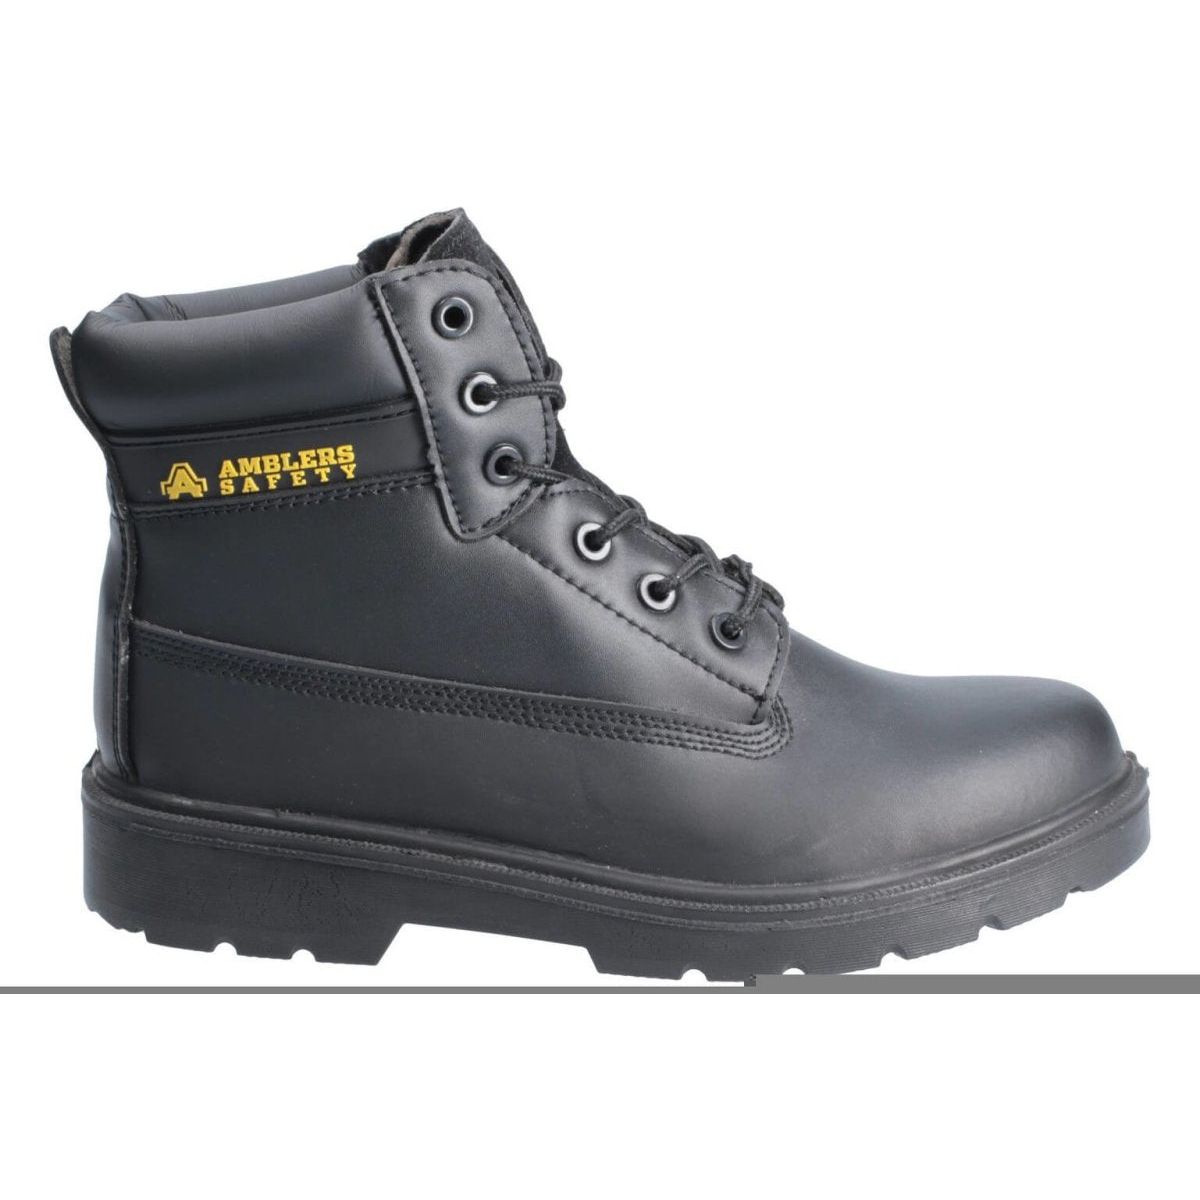 Amblers Fs12C Metal-Free Safety Boots Womens - workweargurus.com